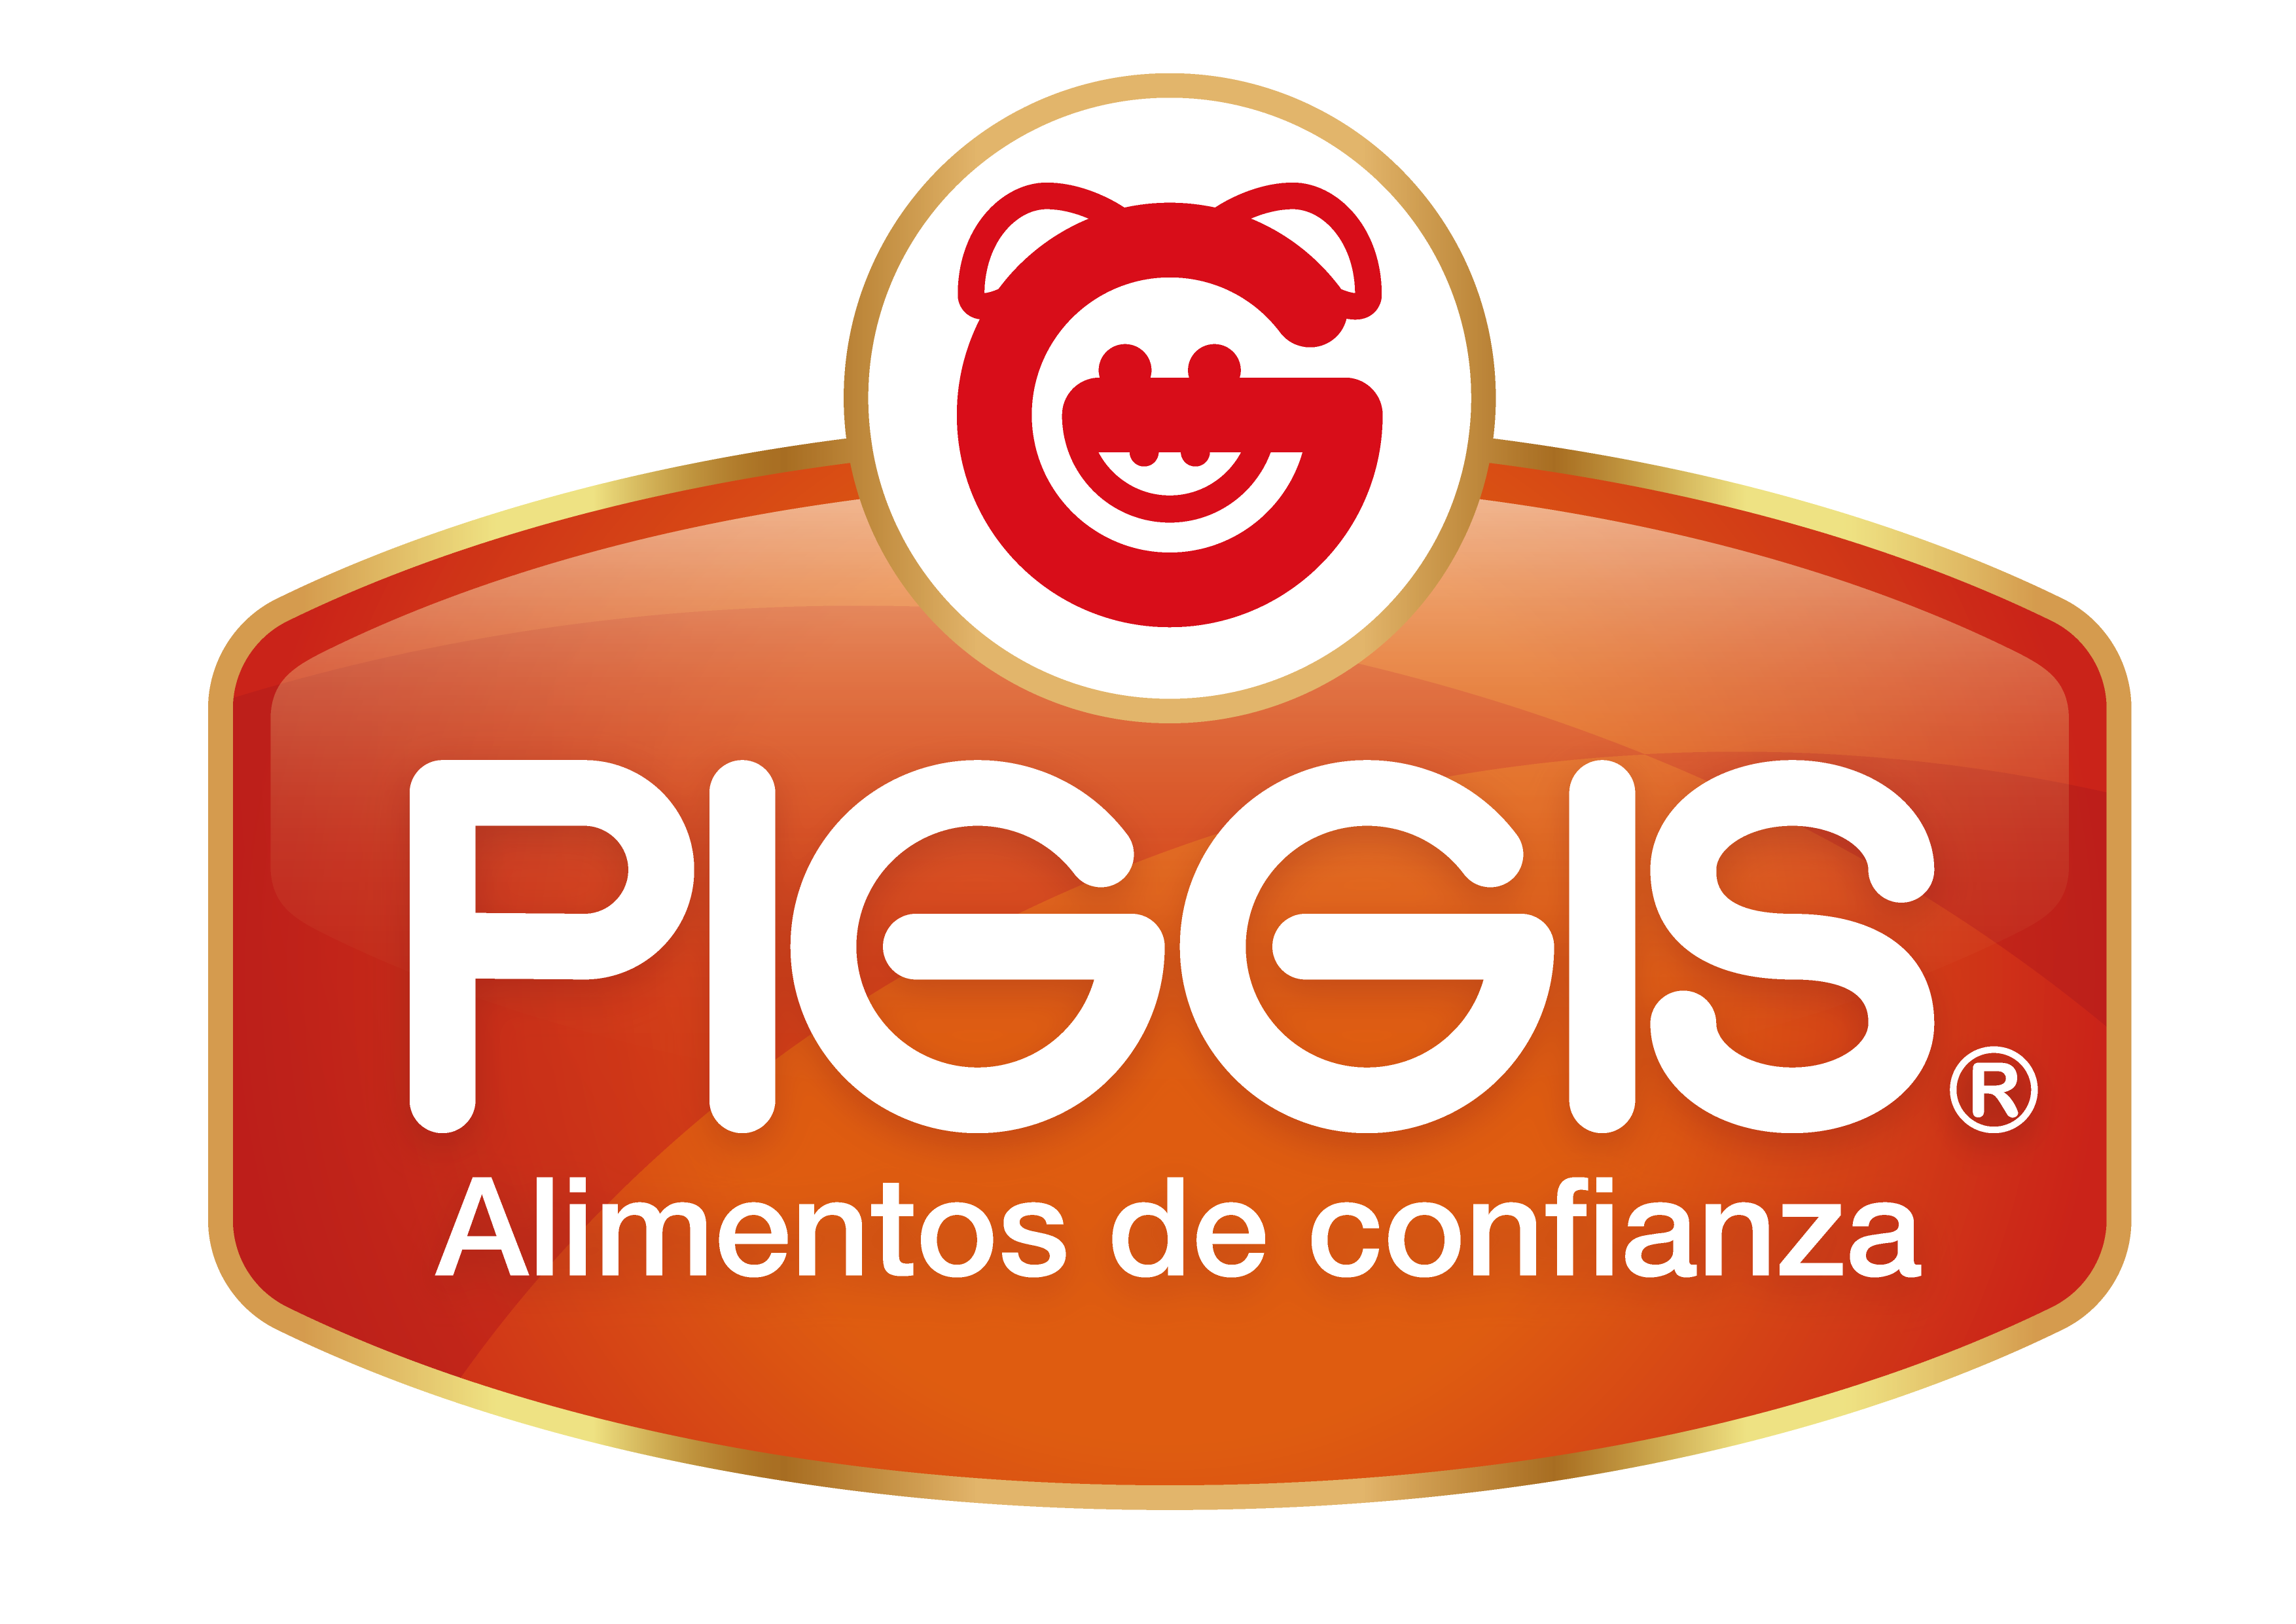 Embutidos Piggis